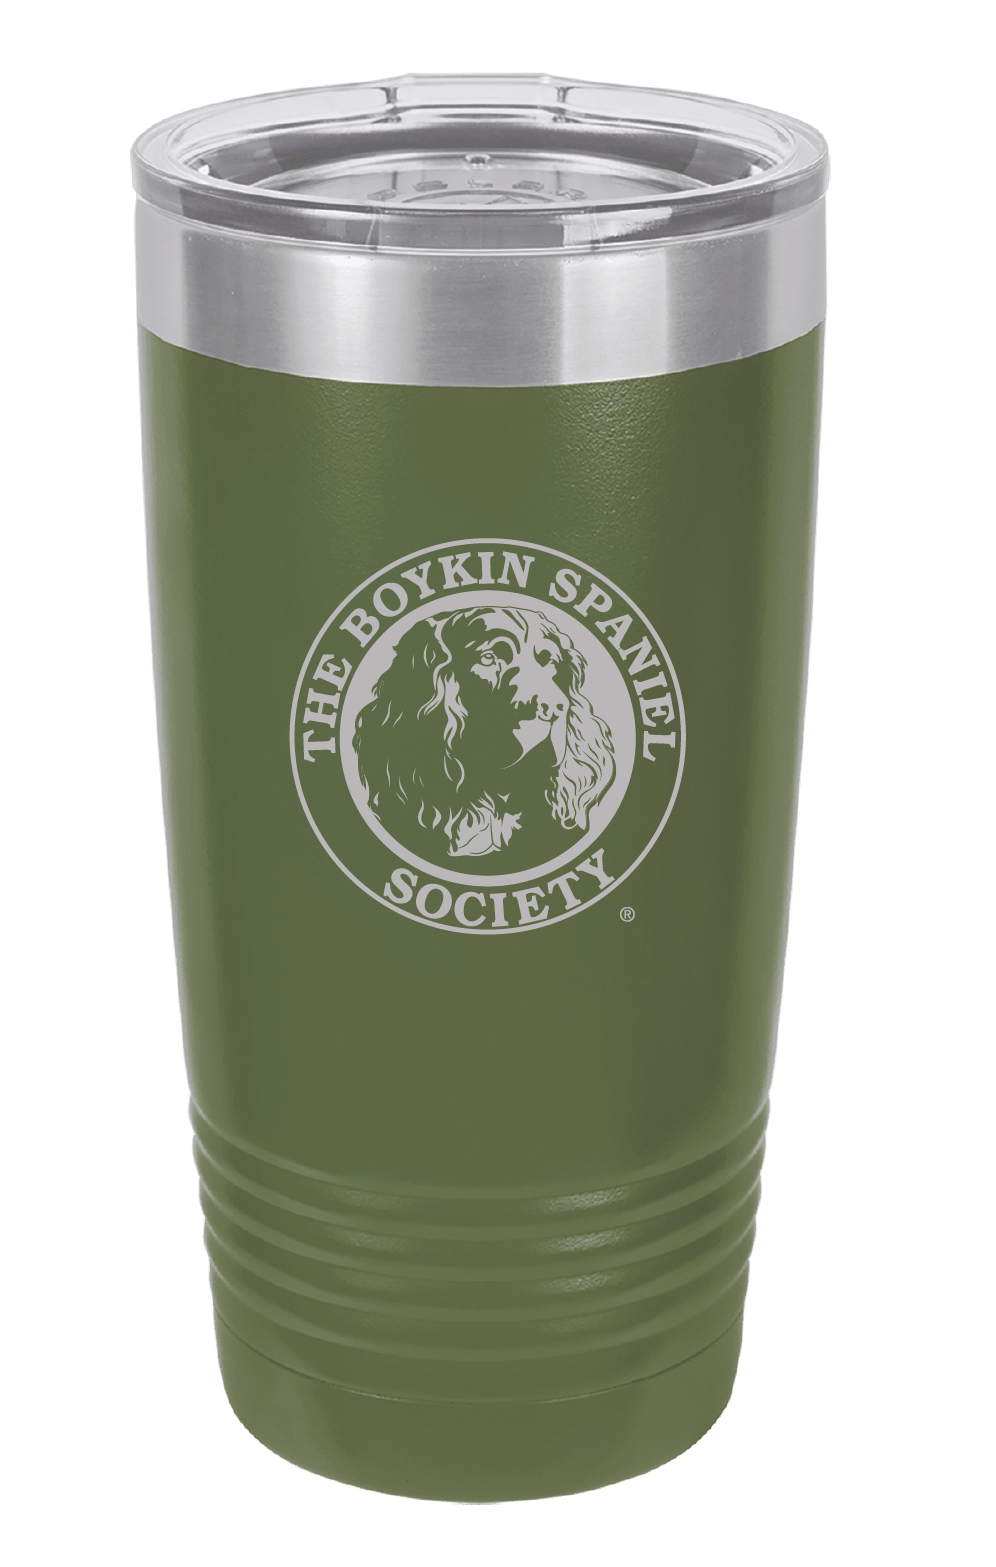 20 oz Tumbler - Boykin Spaniel Society Official Seal Engraved (Olive Green)